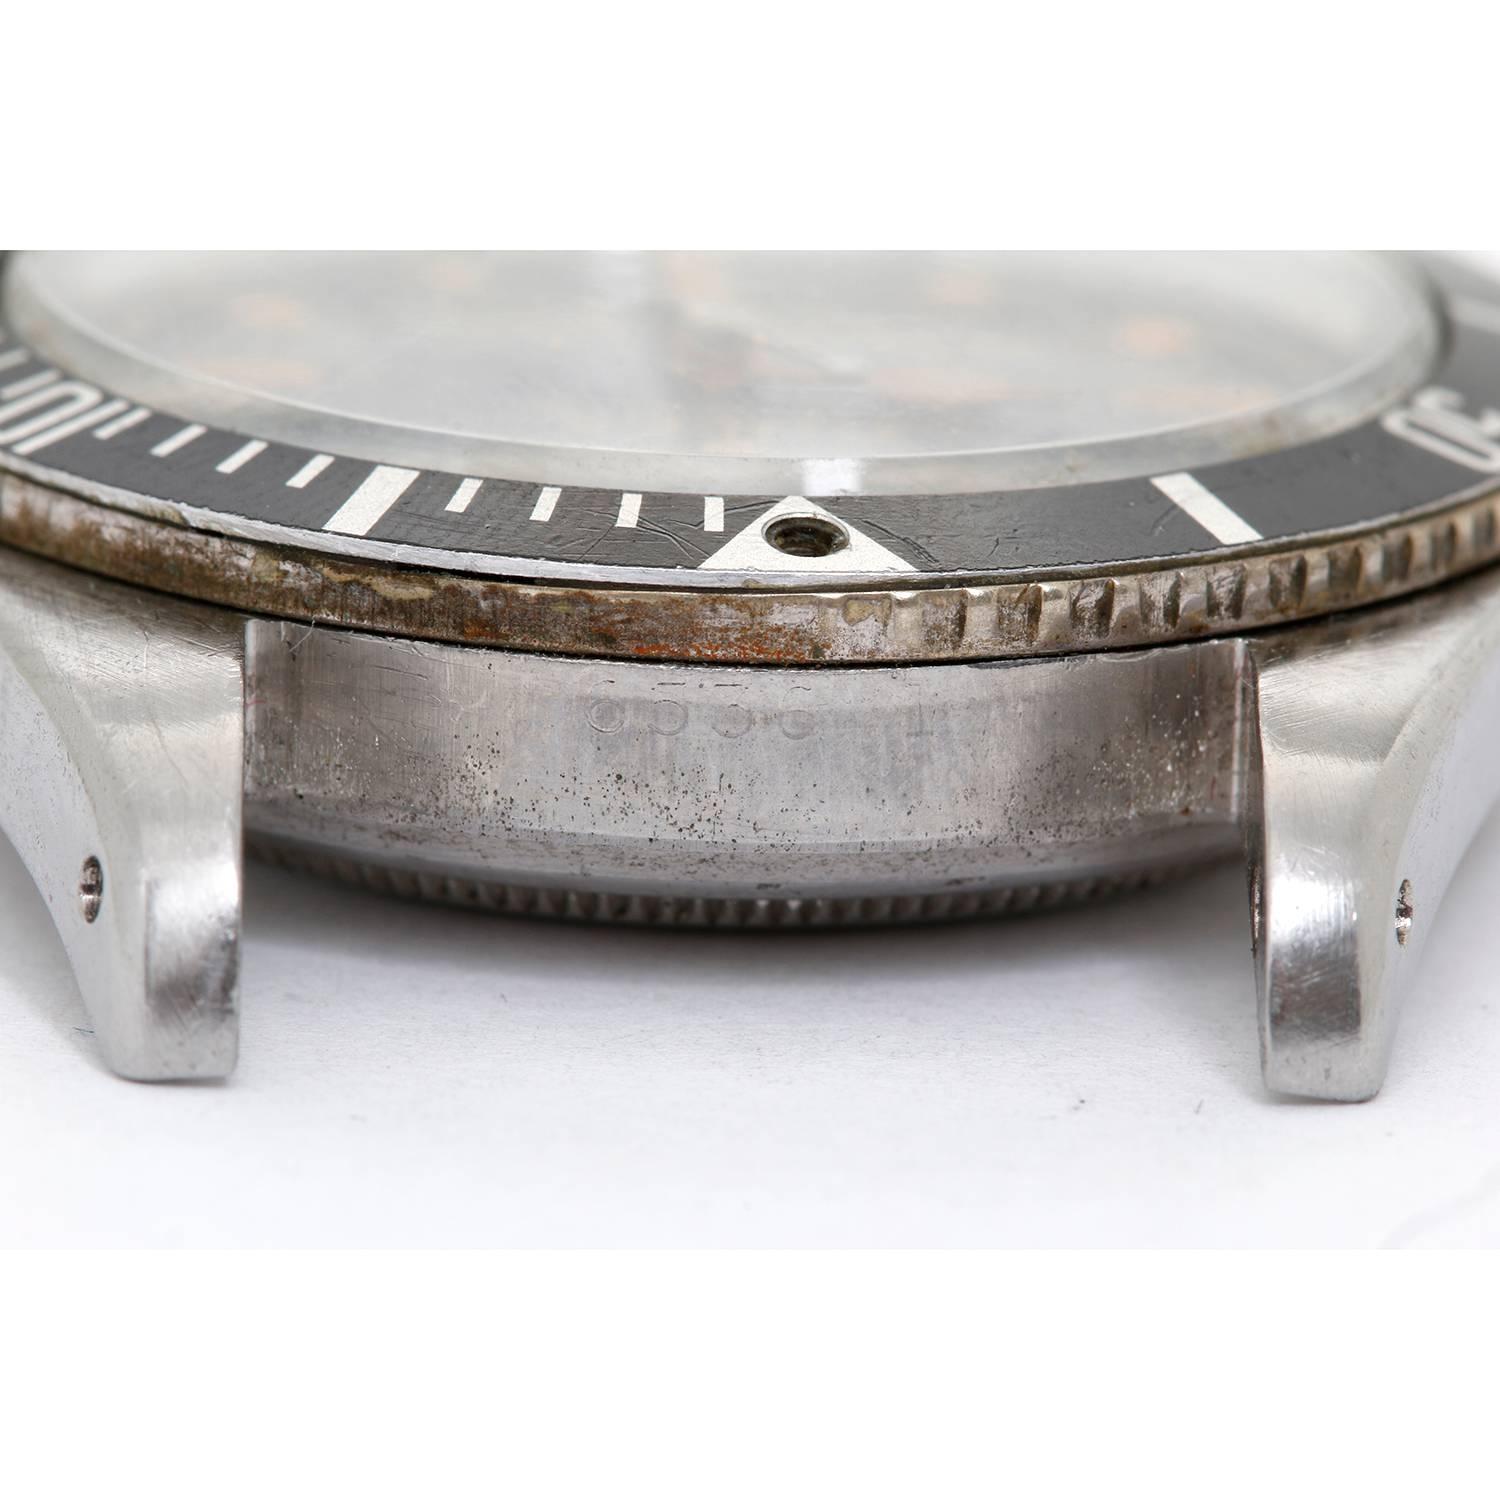 Men's Rolex Stainless Steel James Bond Submariner Self Winding Wristwatch Ref 6536/1